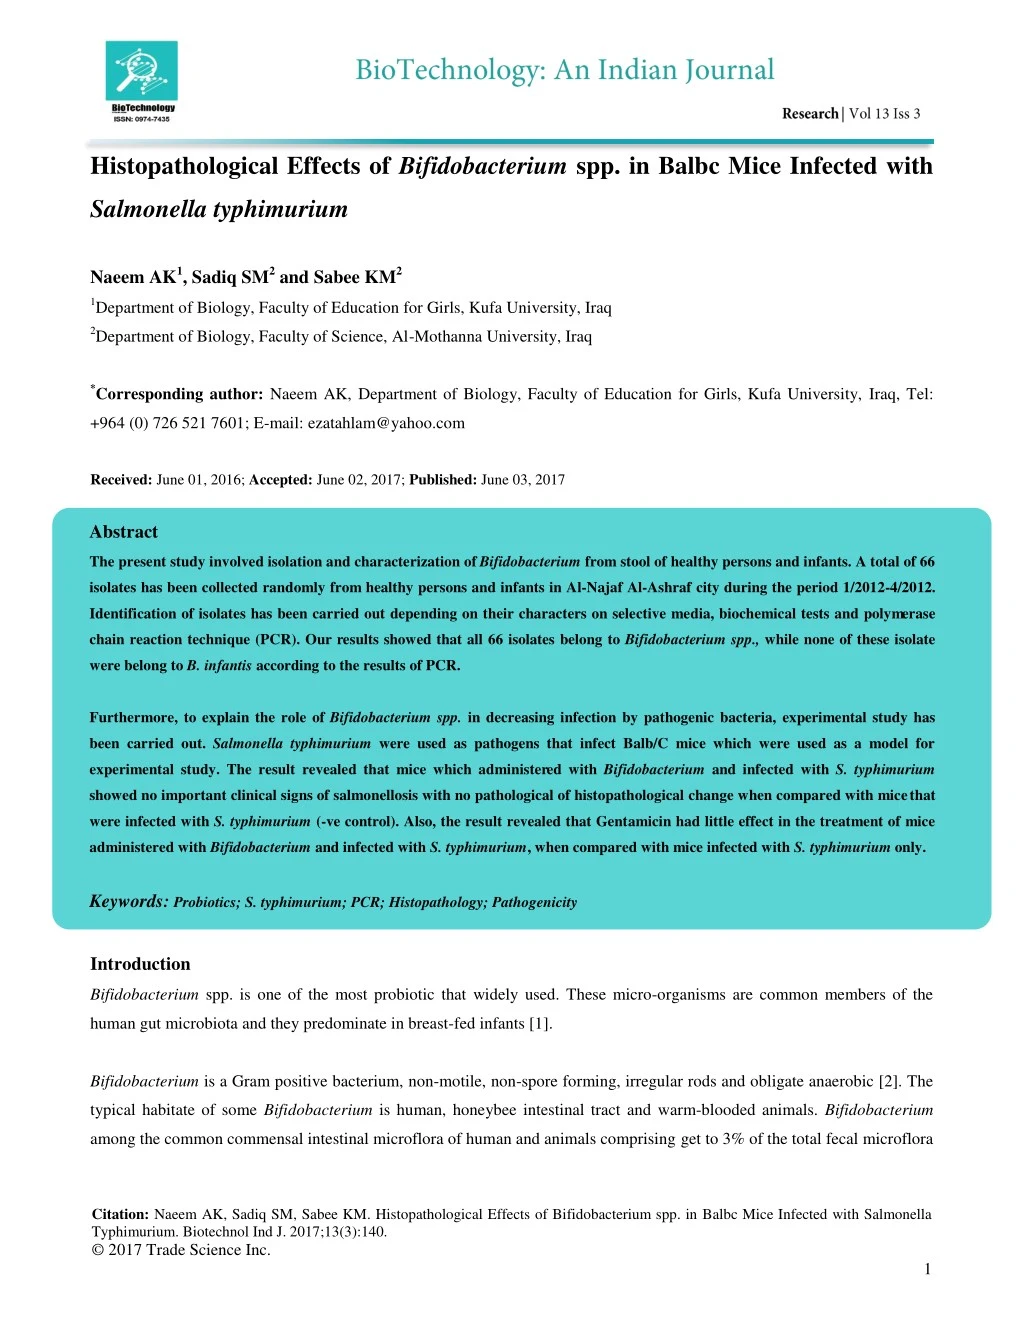 histopathological effects of bifidobacterium